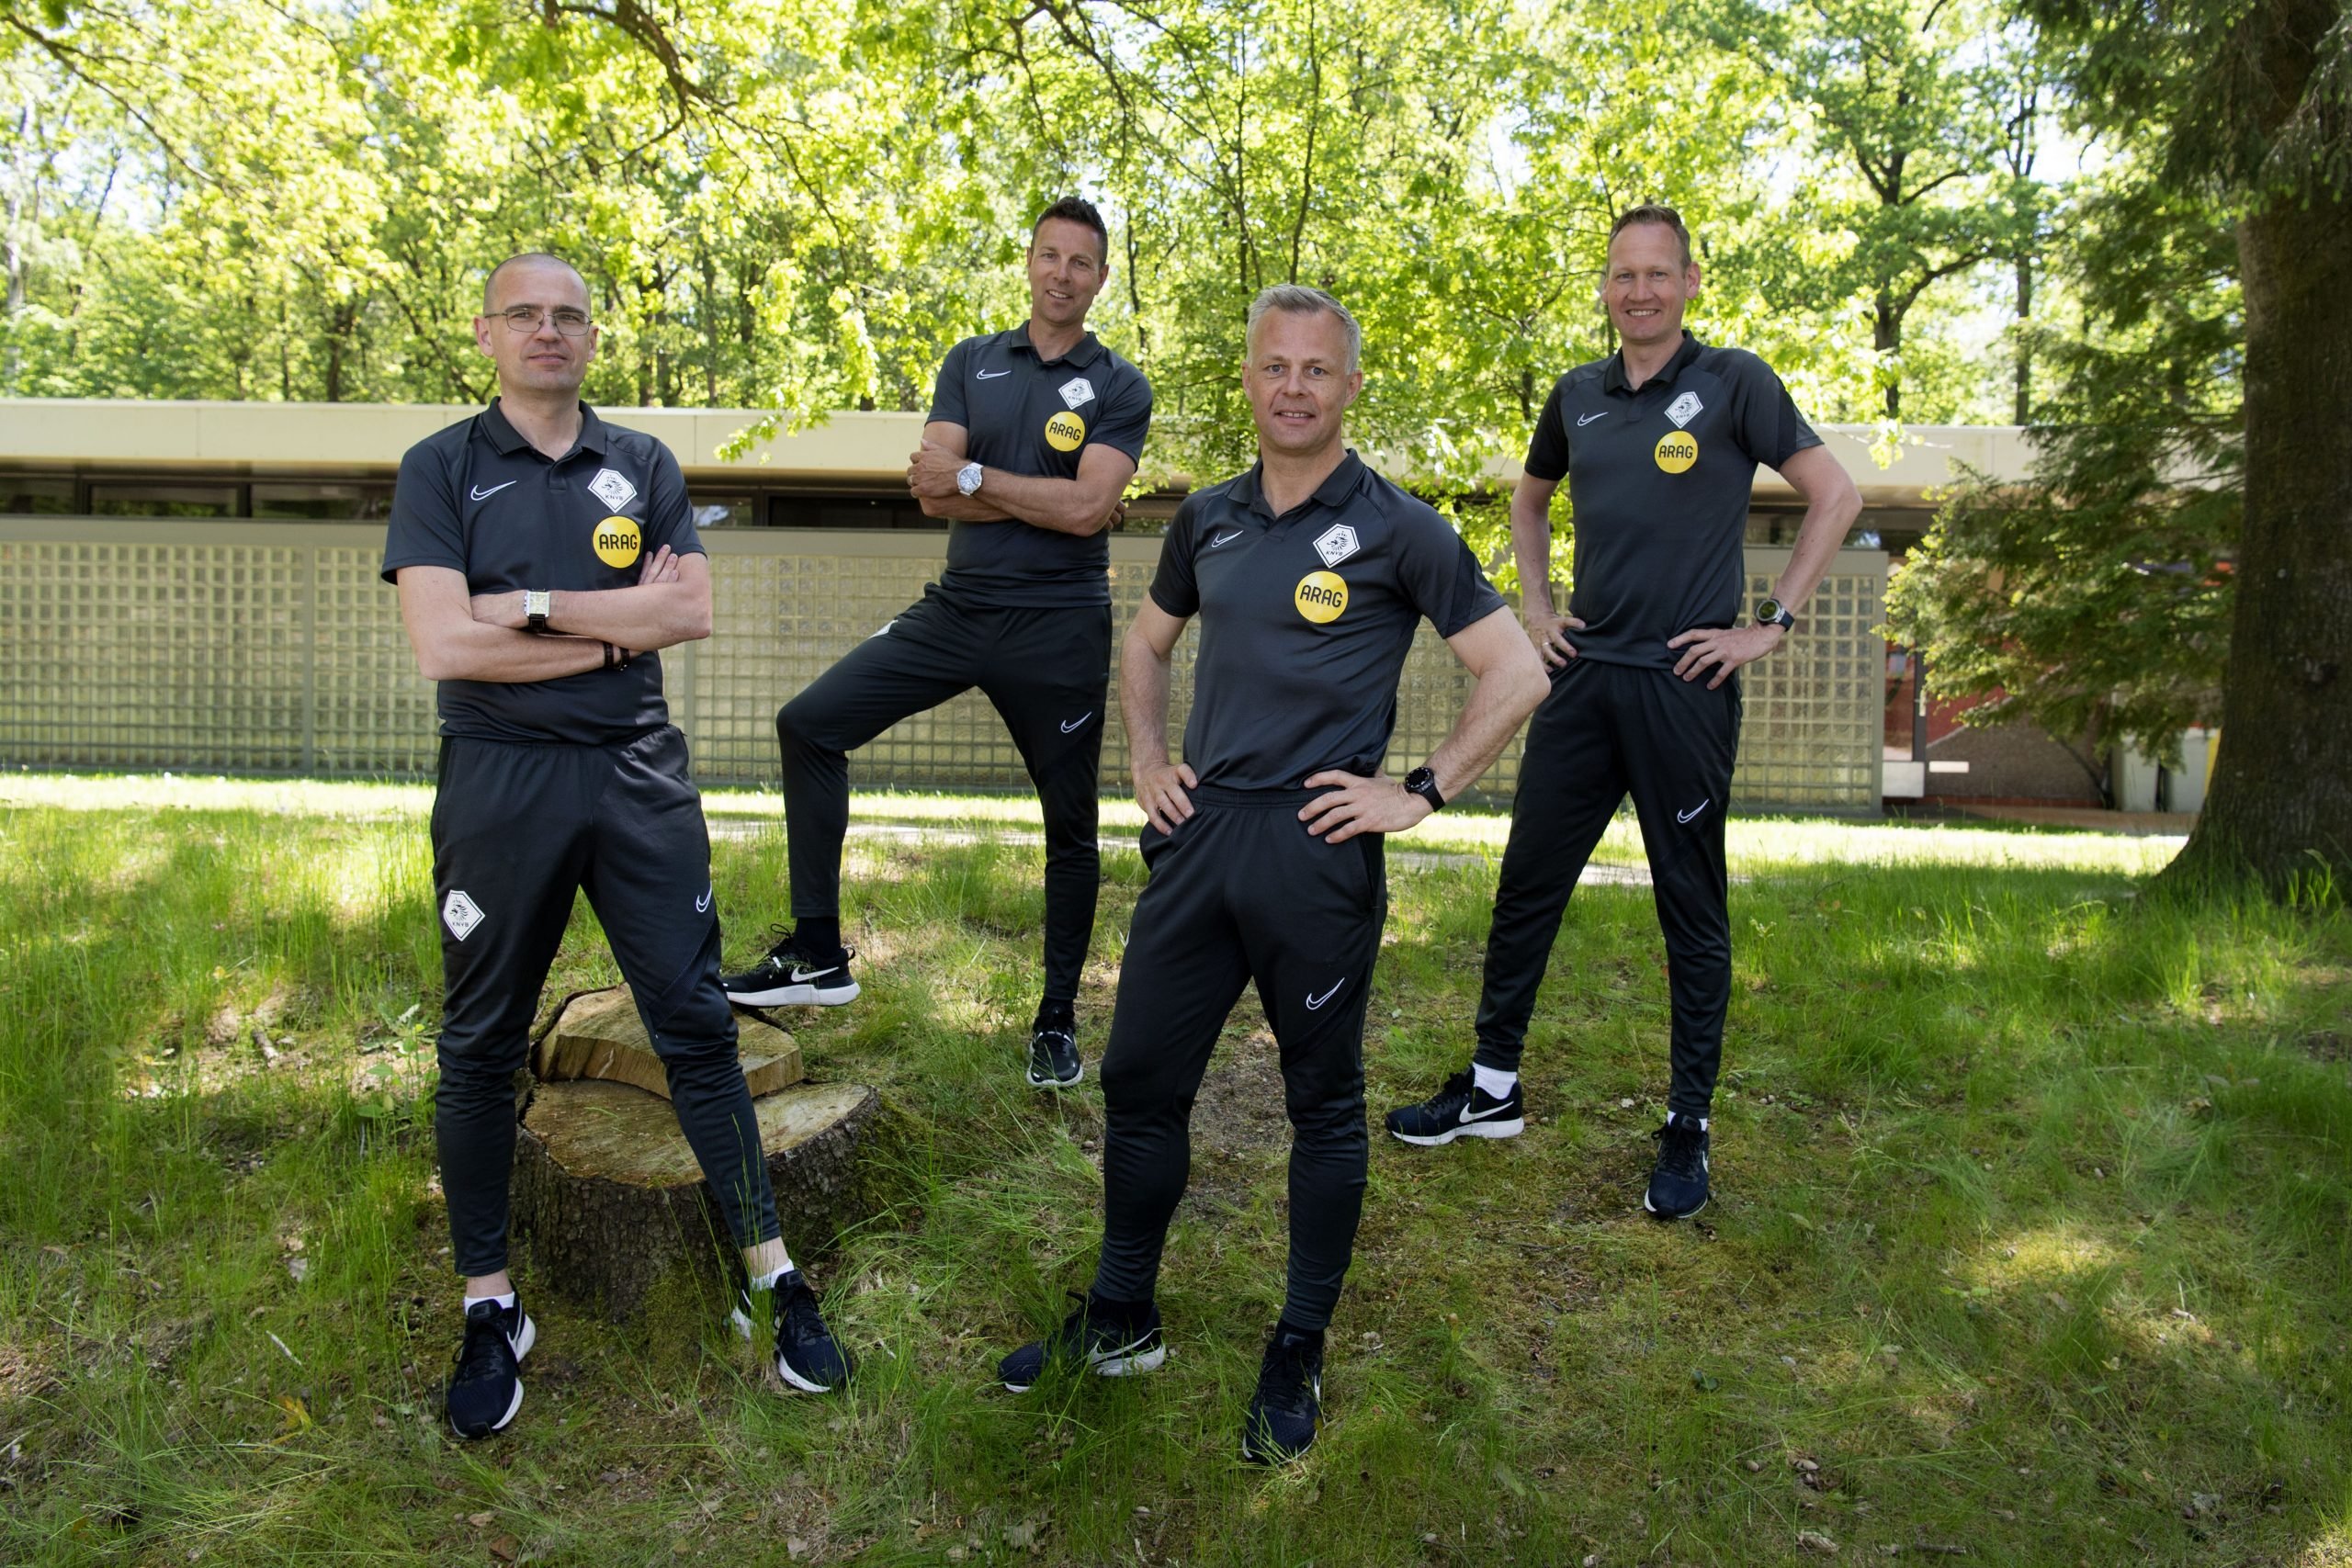 Scheidsrechters Hessel Steegstra, Sander van Roekel, Björn Kuipers en Erwin Zeinstra. Foto: ANP/Olaf Kraak